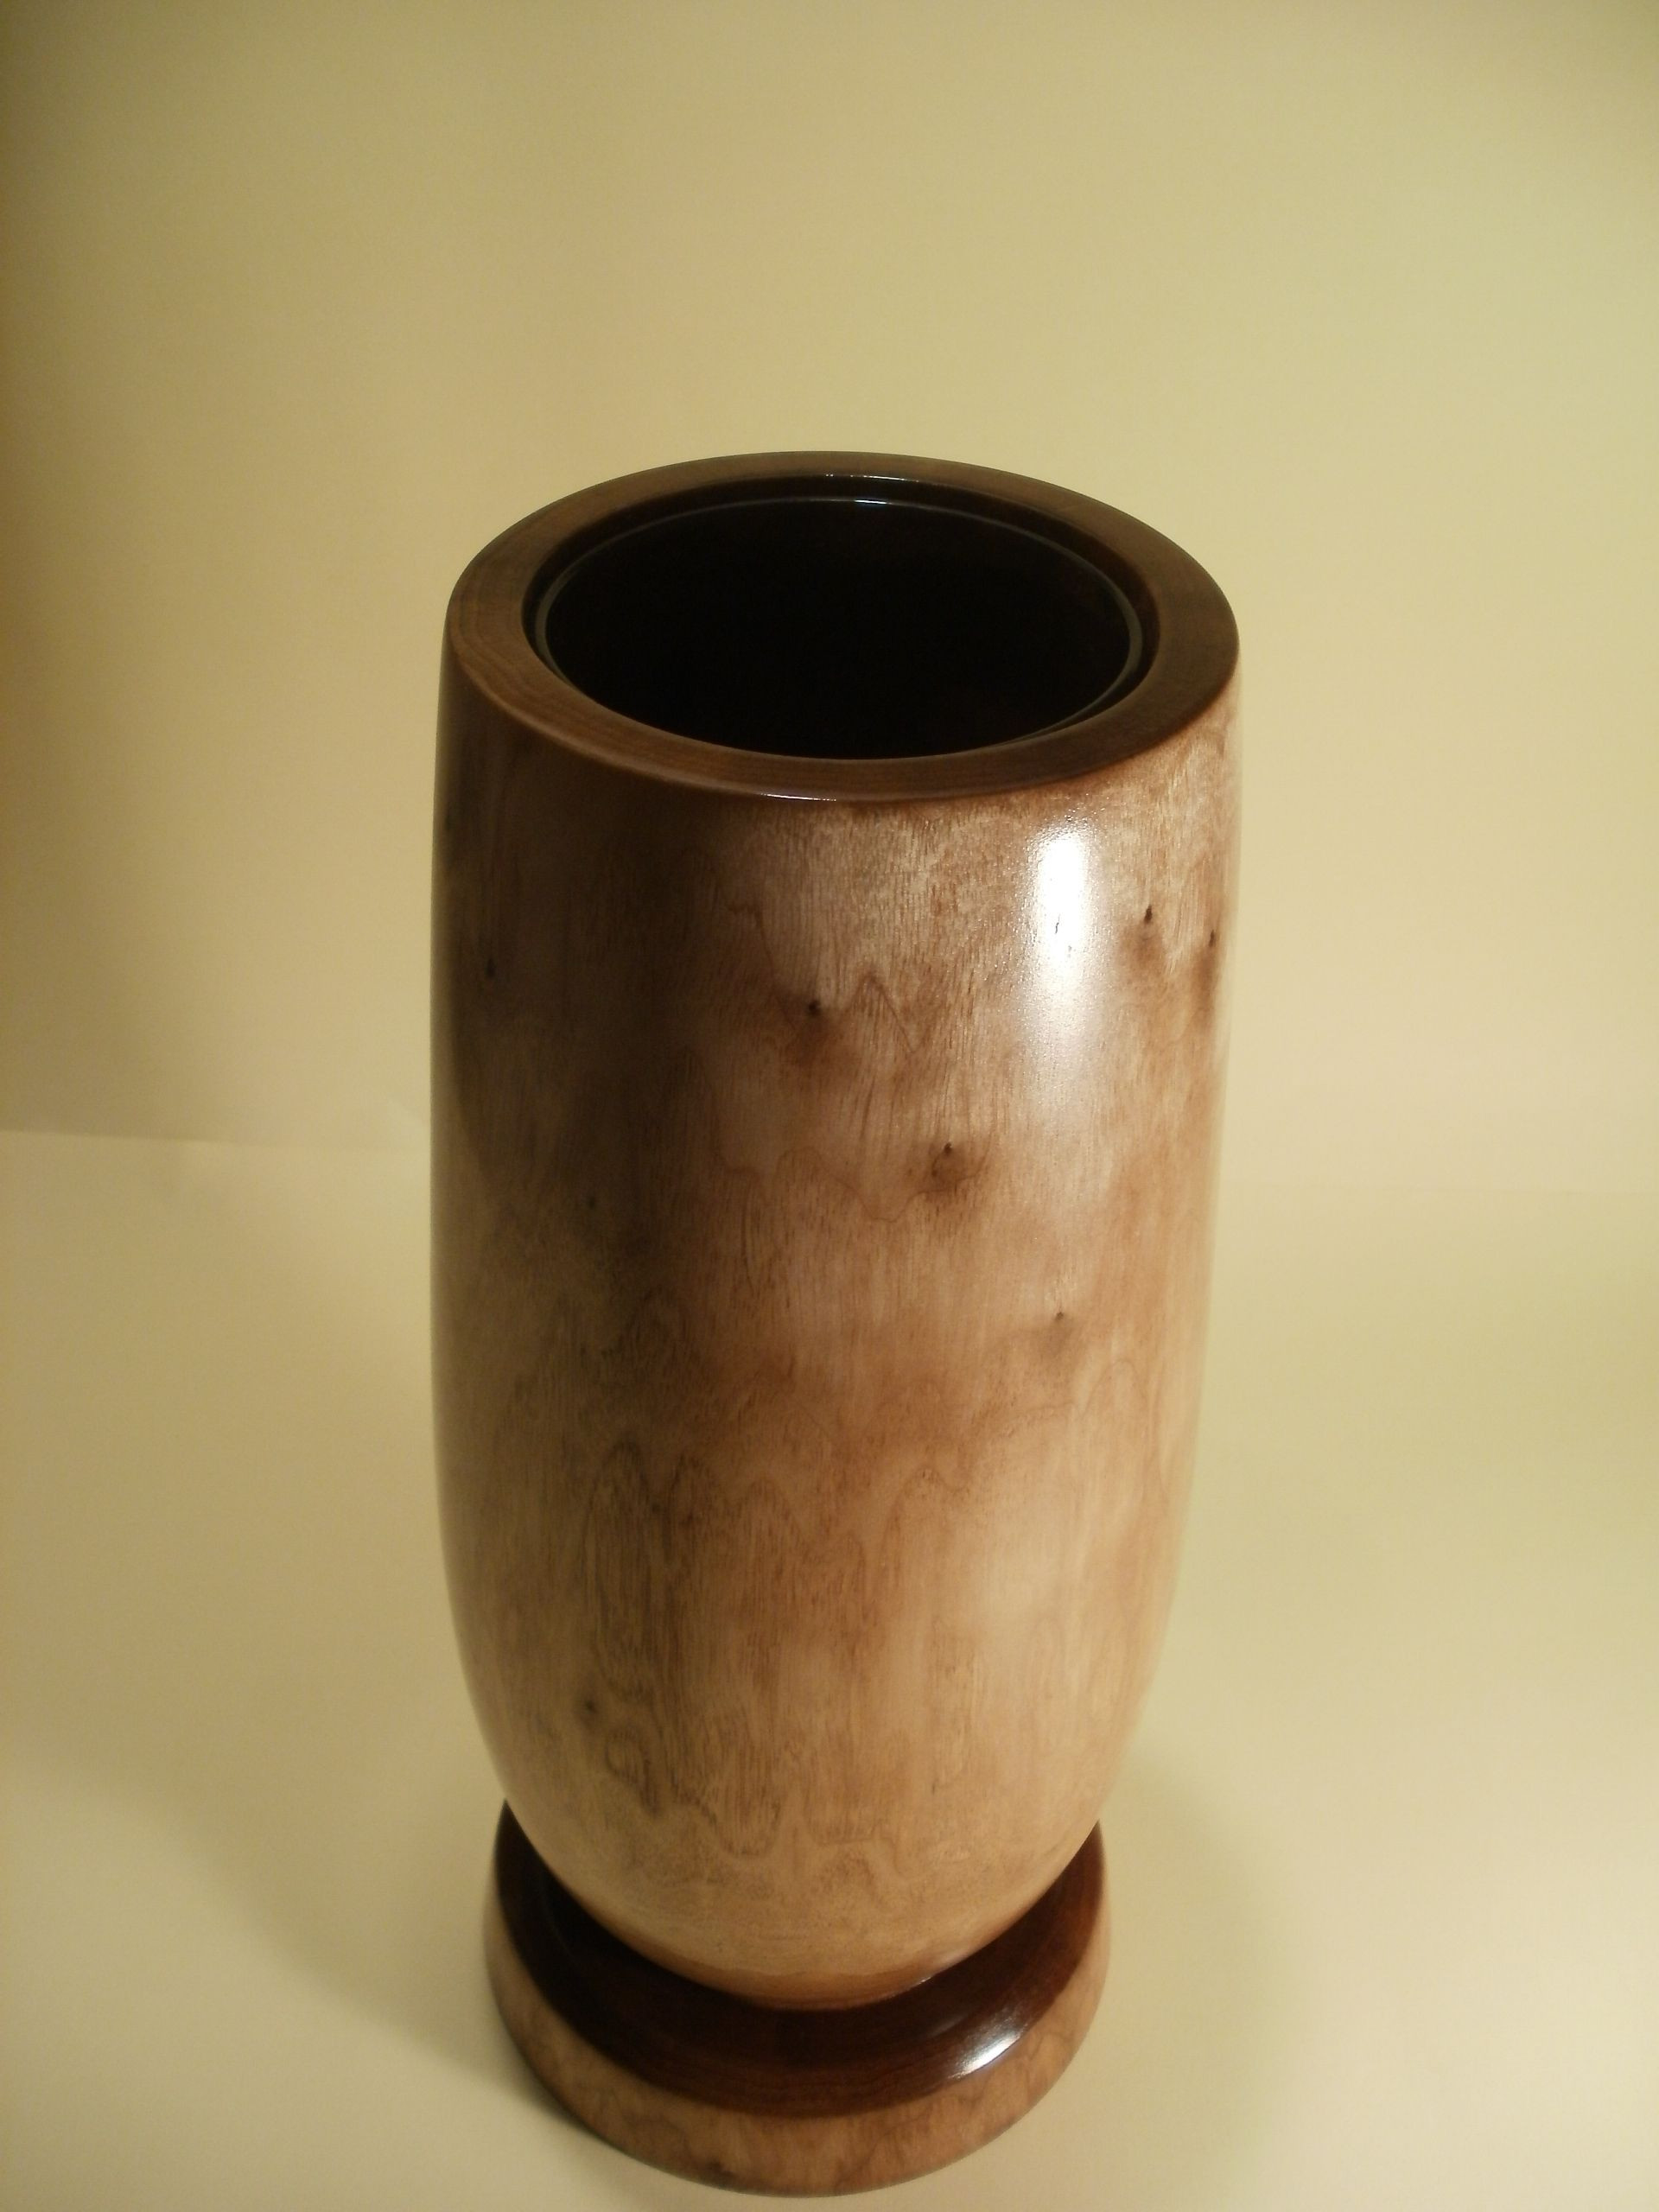 plastic flower vase liners of black walnut vase with glass inserts woodturning by ervin horn pertaining to black walnut vase with glass inserts woodturning by ervin horn